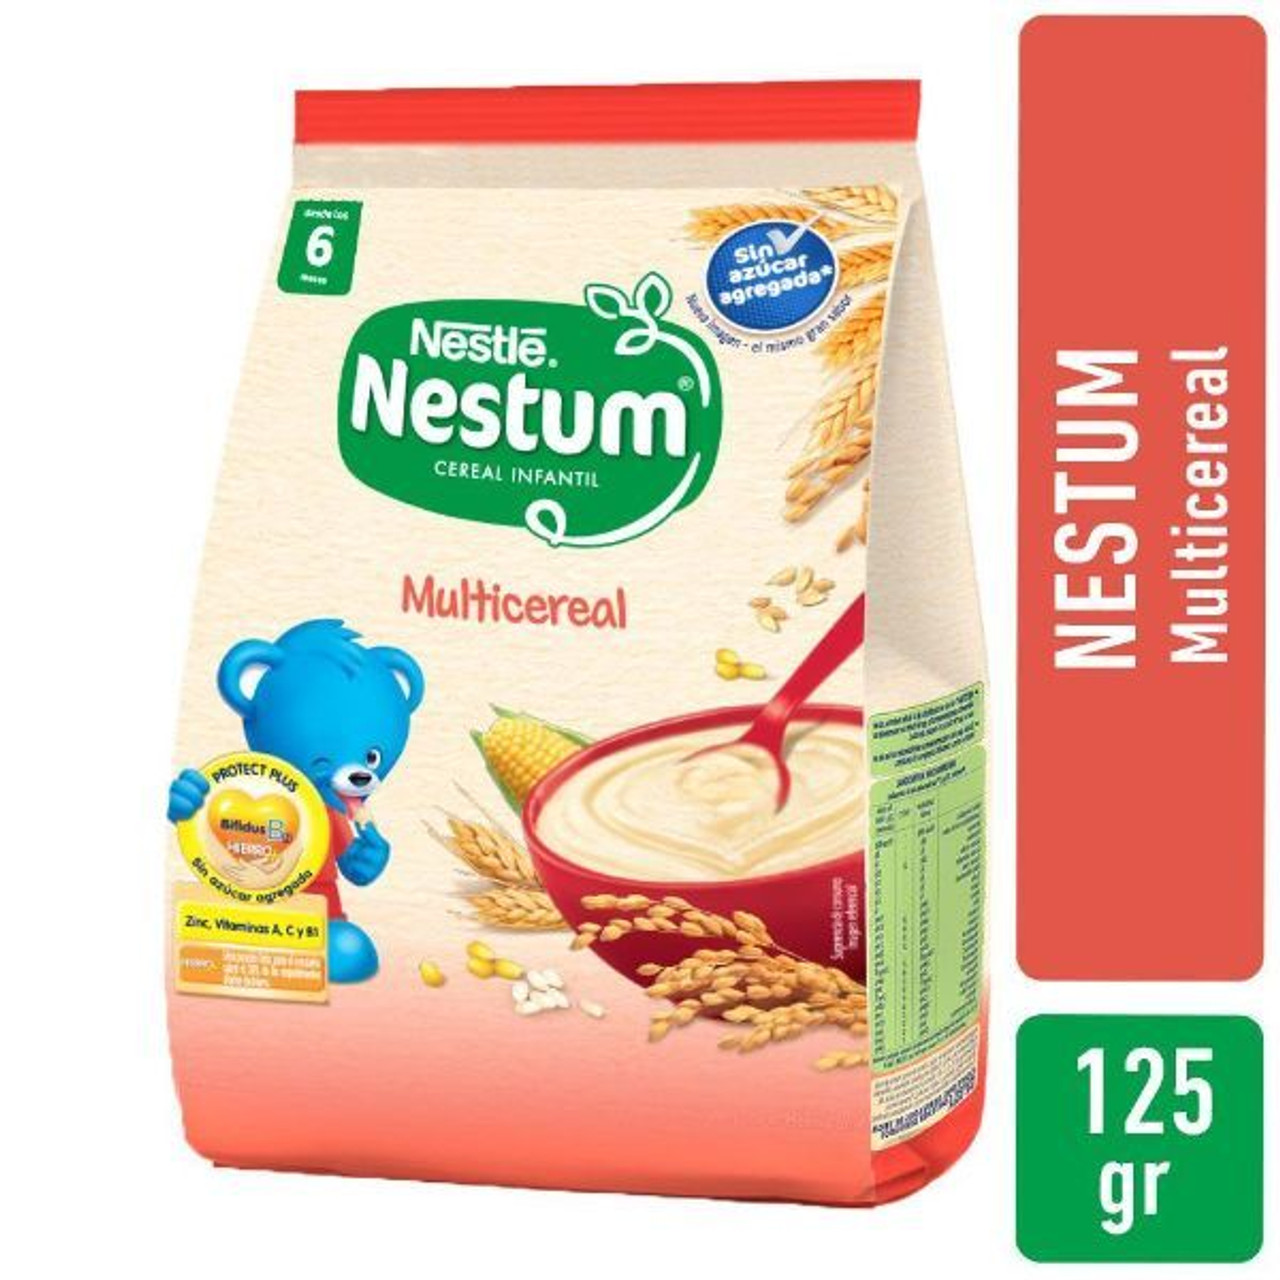 Nestum Cereal Infantil Trigo y Miel Powder Ready To Make Baby Food Made  With Wheat Flour